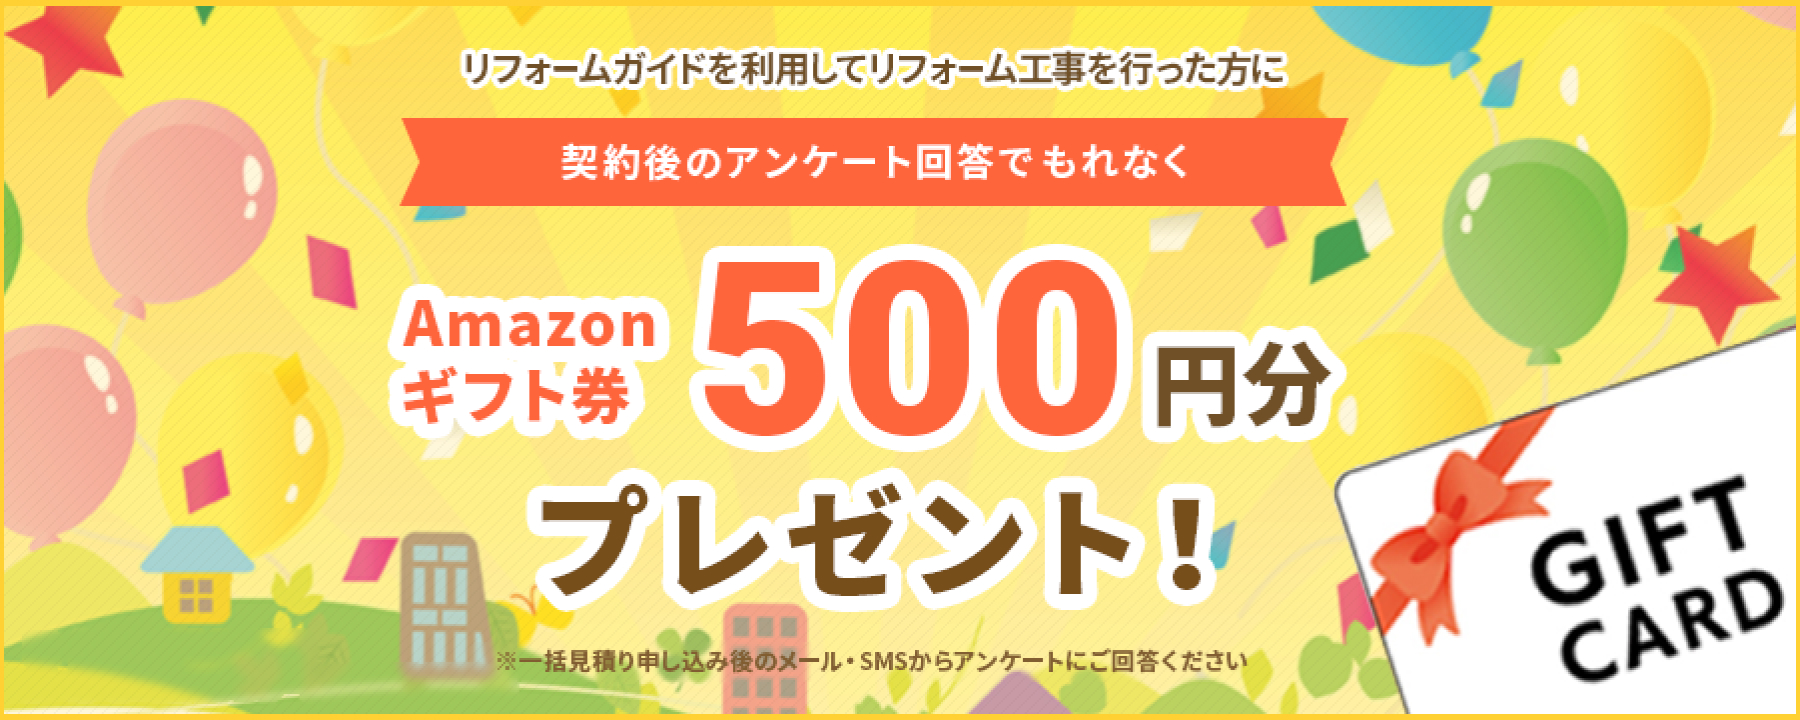 Amazonギフト券 500円分プレゼント!